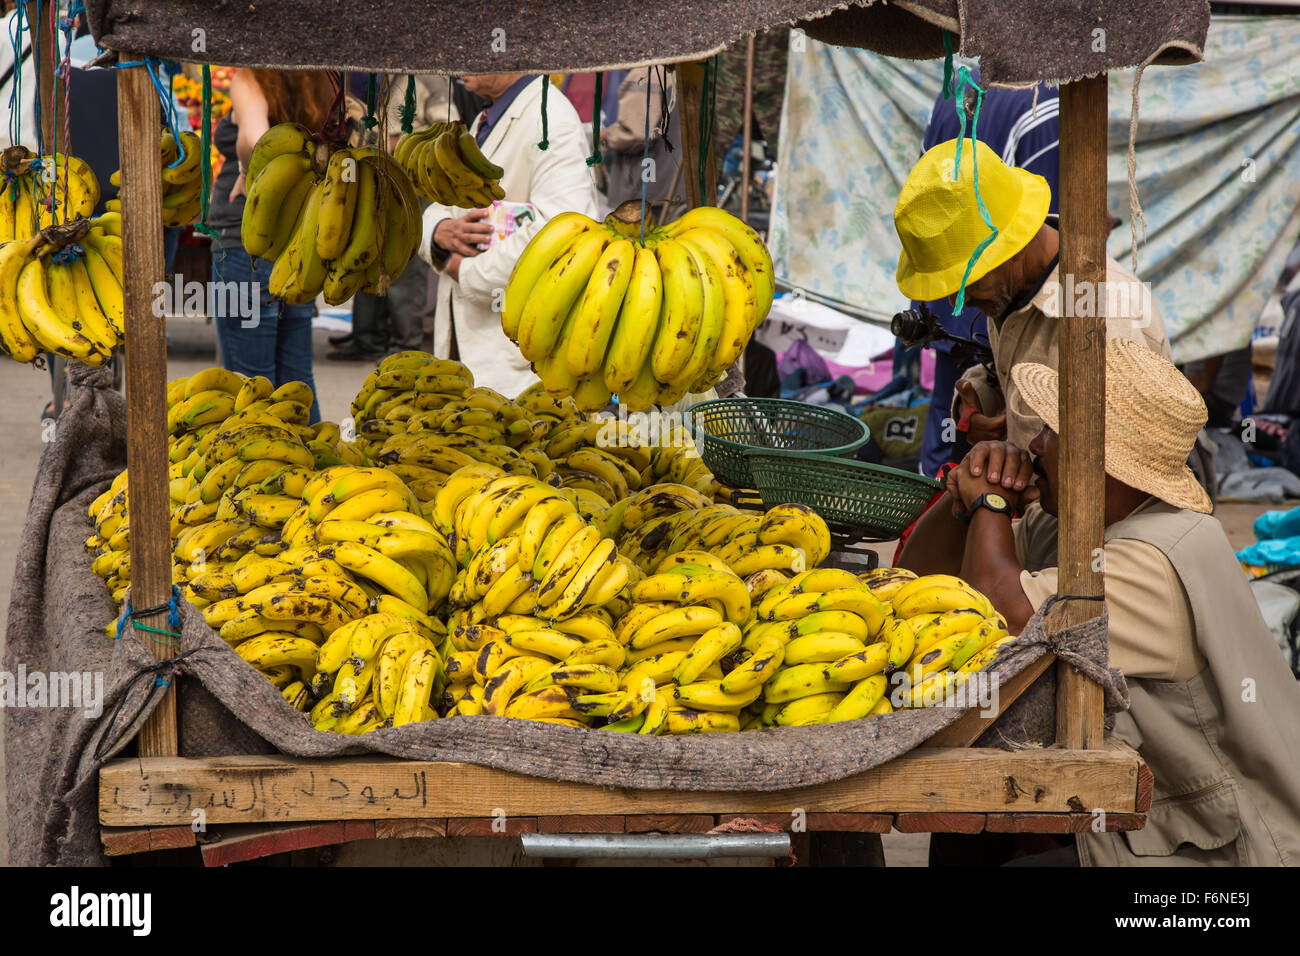 Verkäufer Bananen auf dem Markt in Marrakesch Marokko Stockfoto